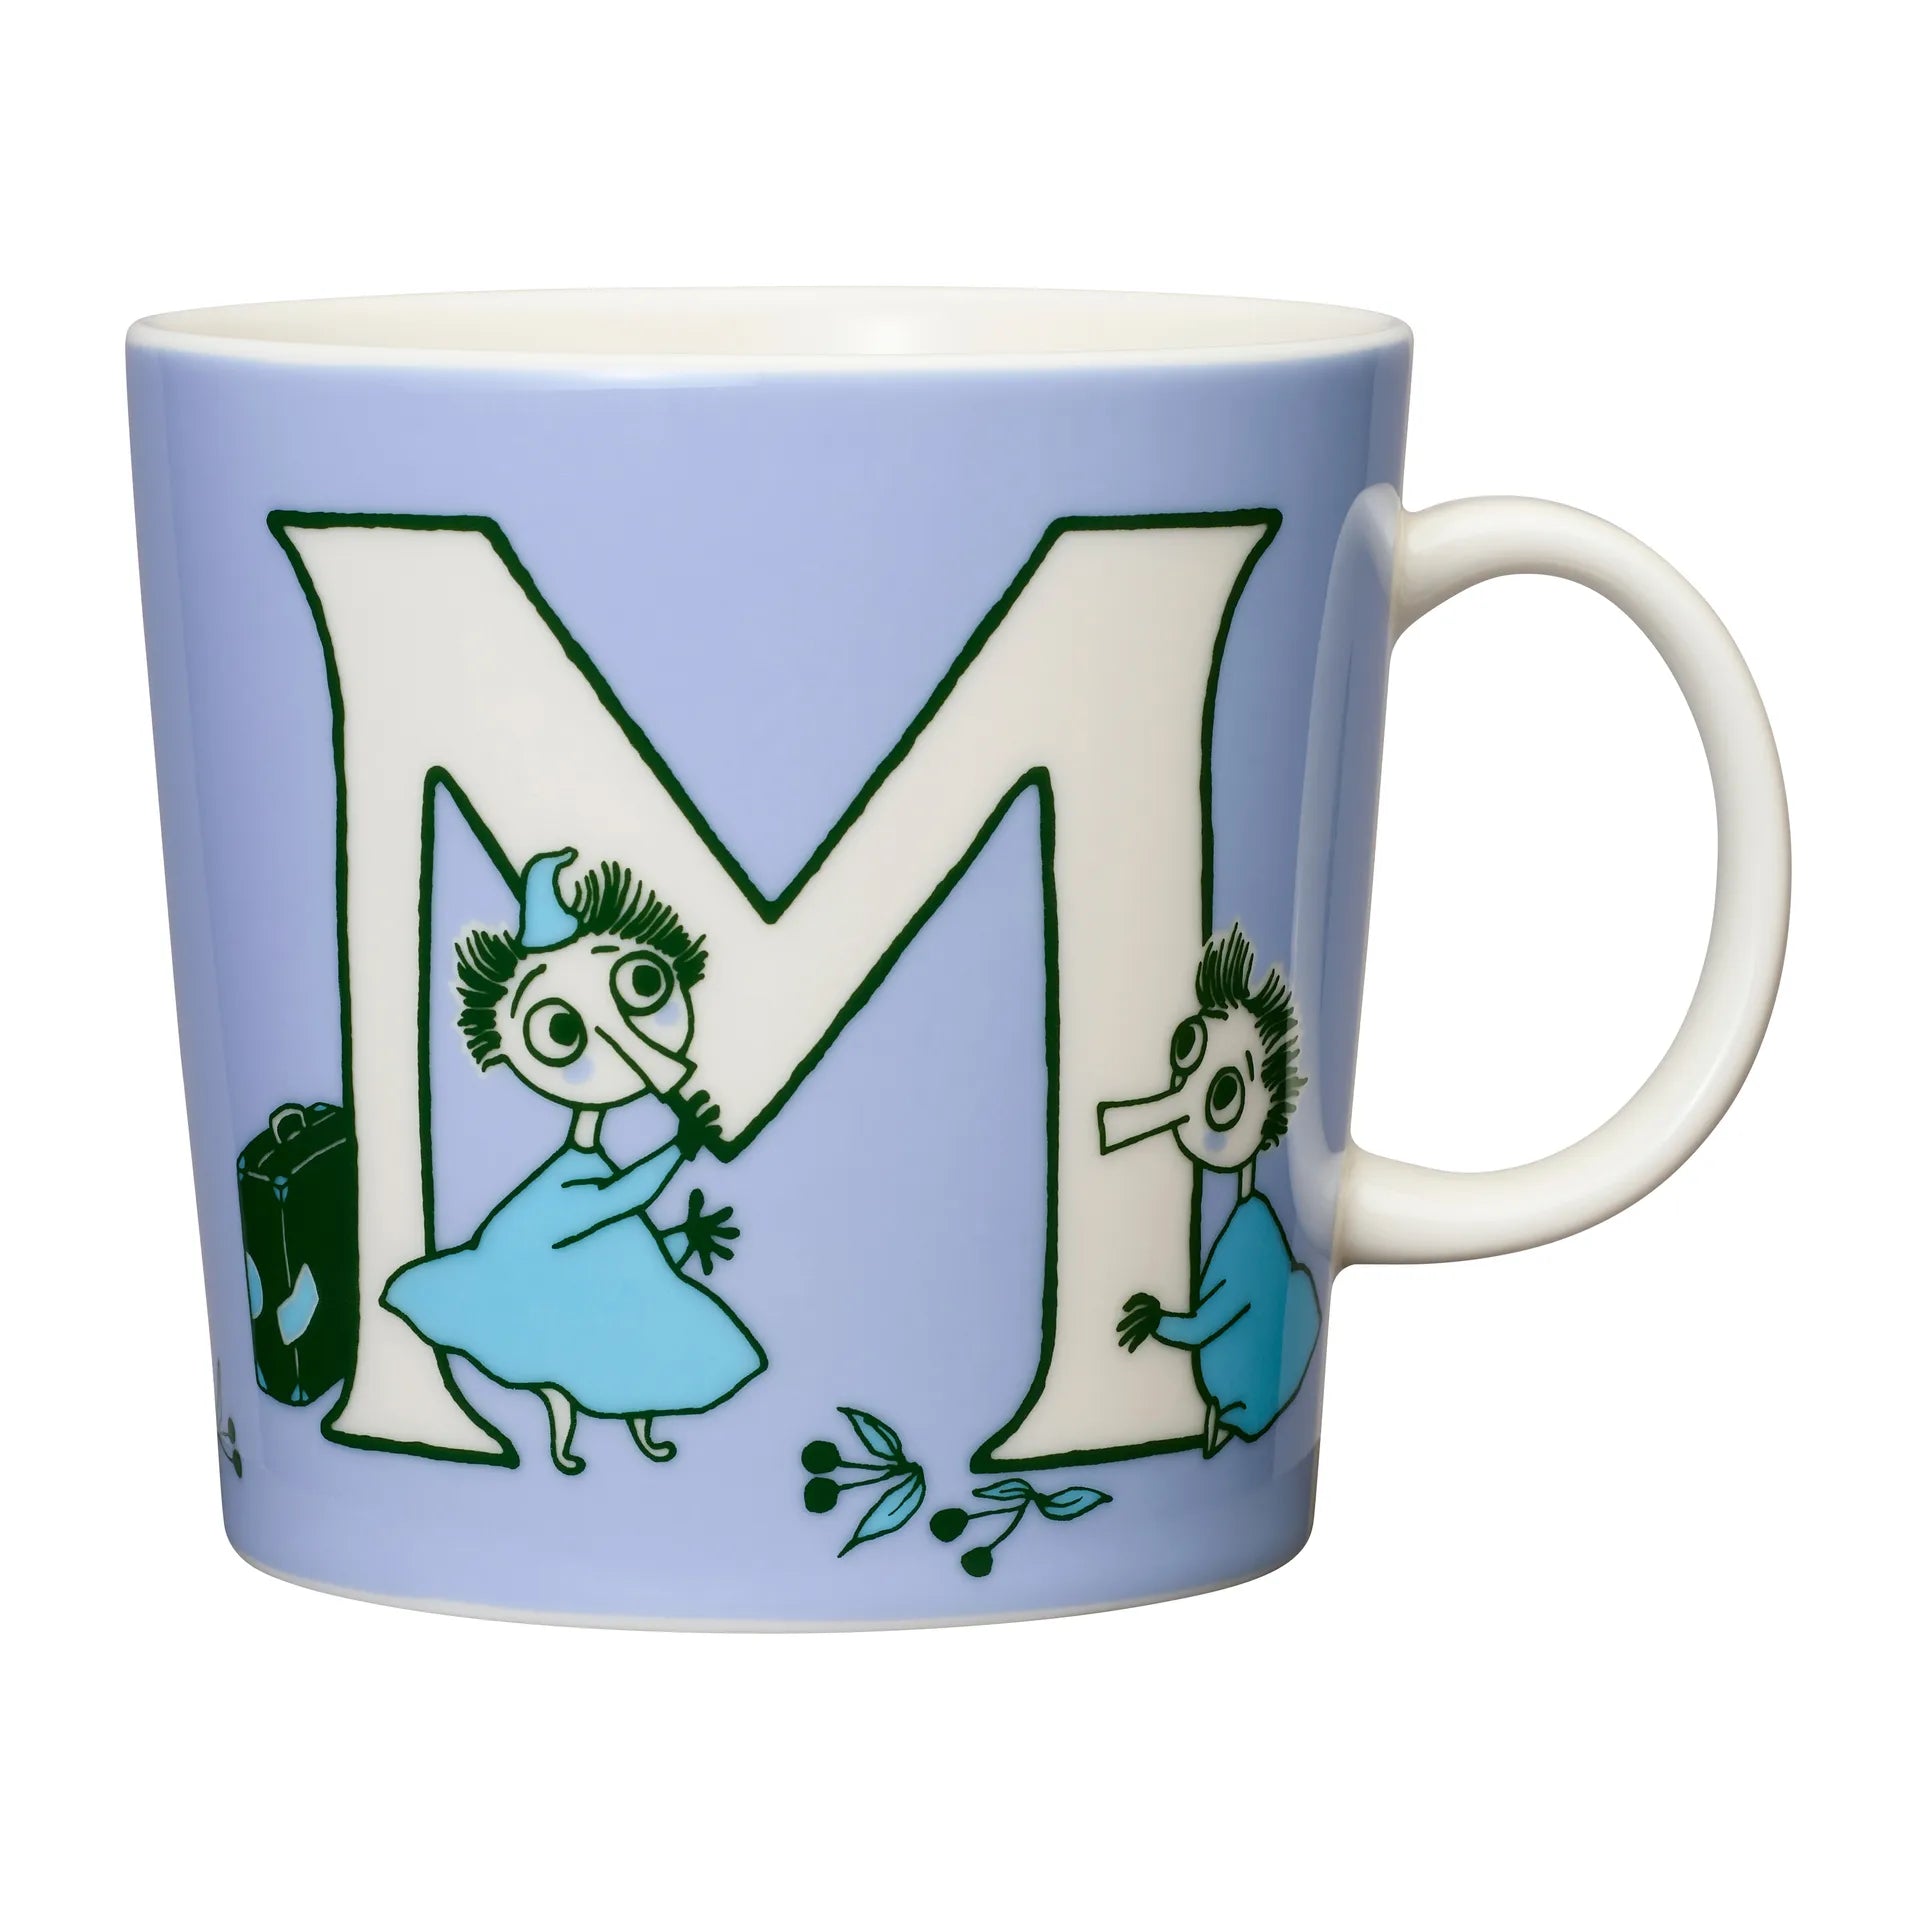 Moomin mug special LARGE 400ml ABC Moomin mug 40 cl M